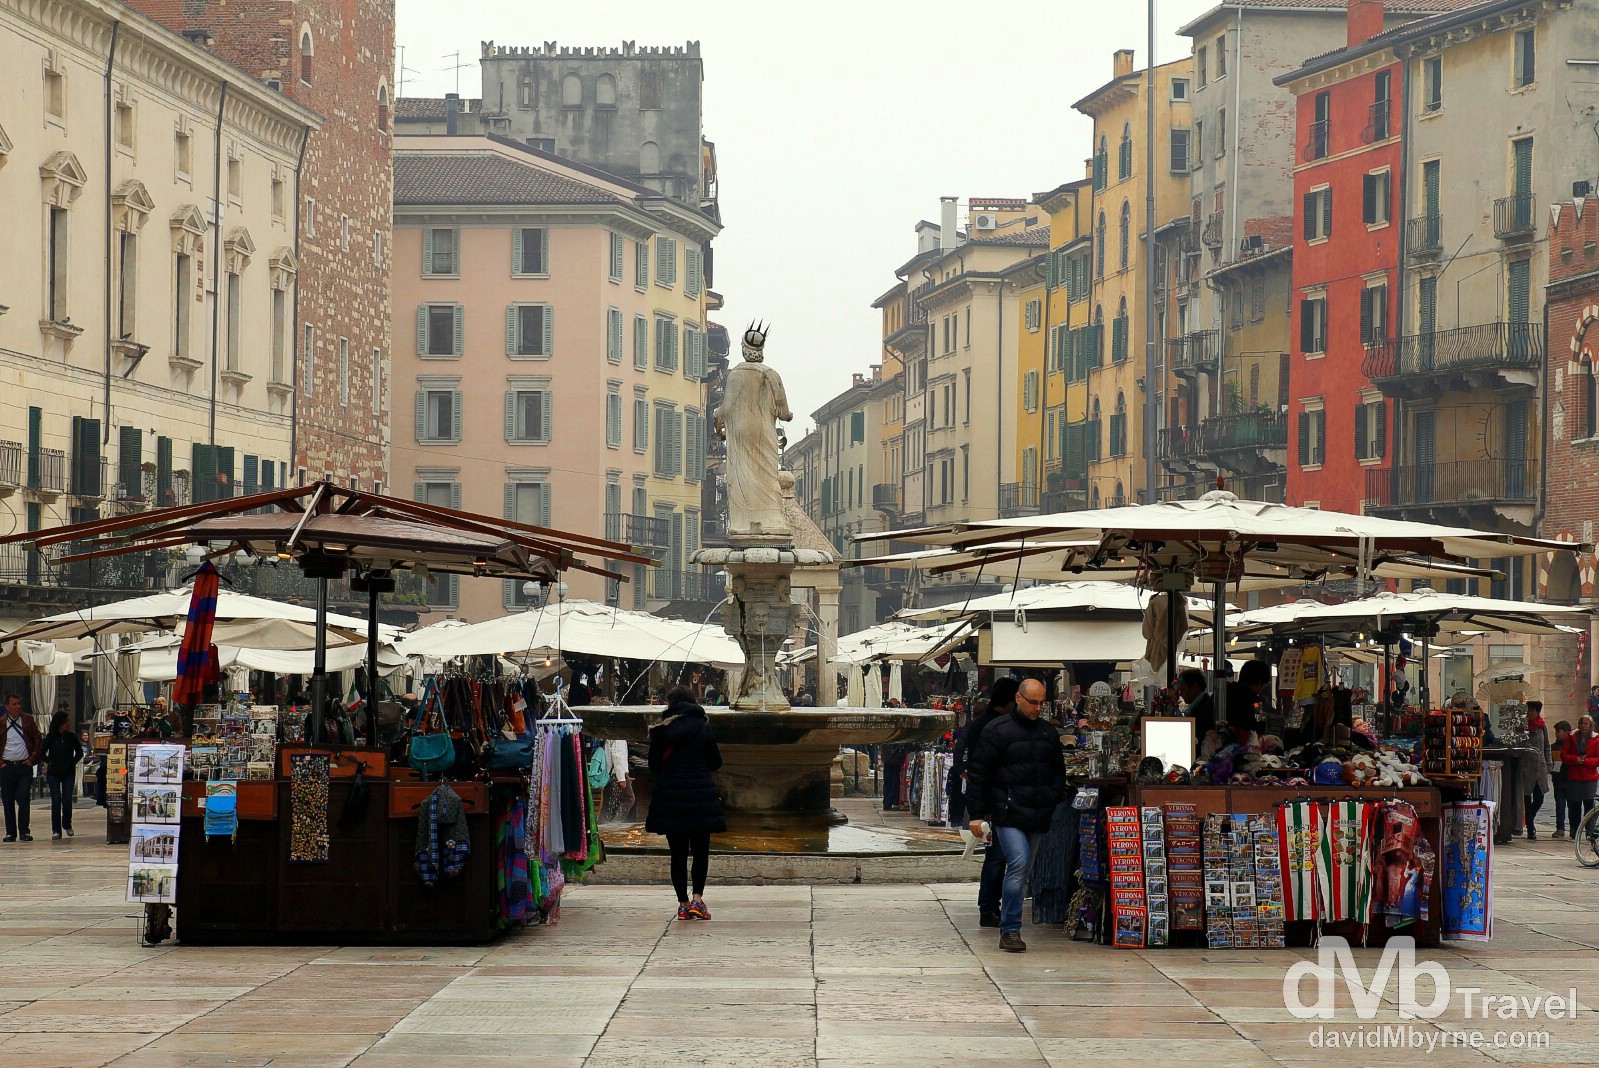 Stalls on Piazza Erbe, Verona, Italy. March 17, 2014.